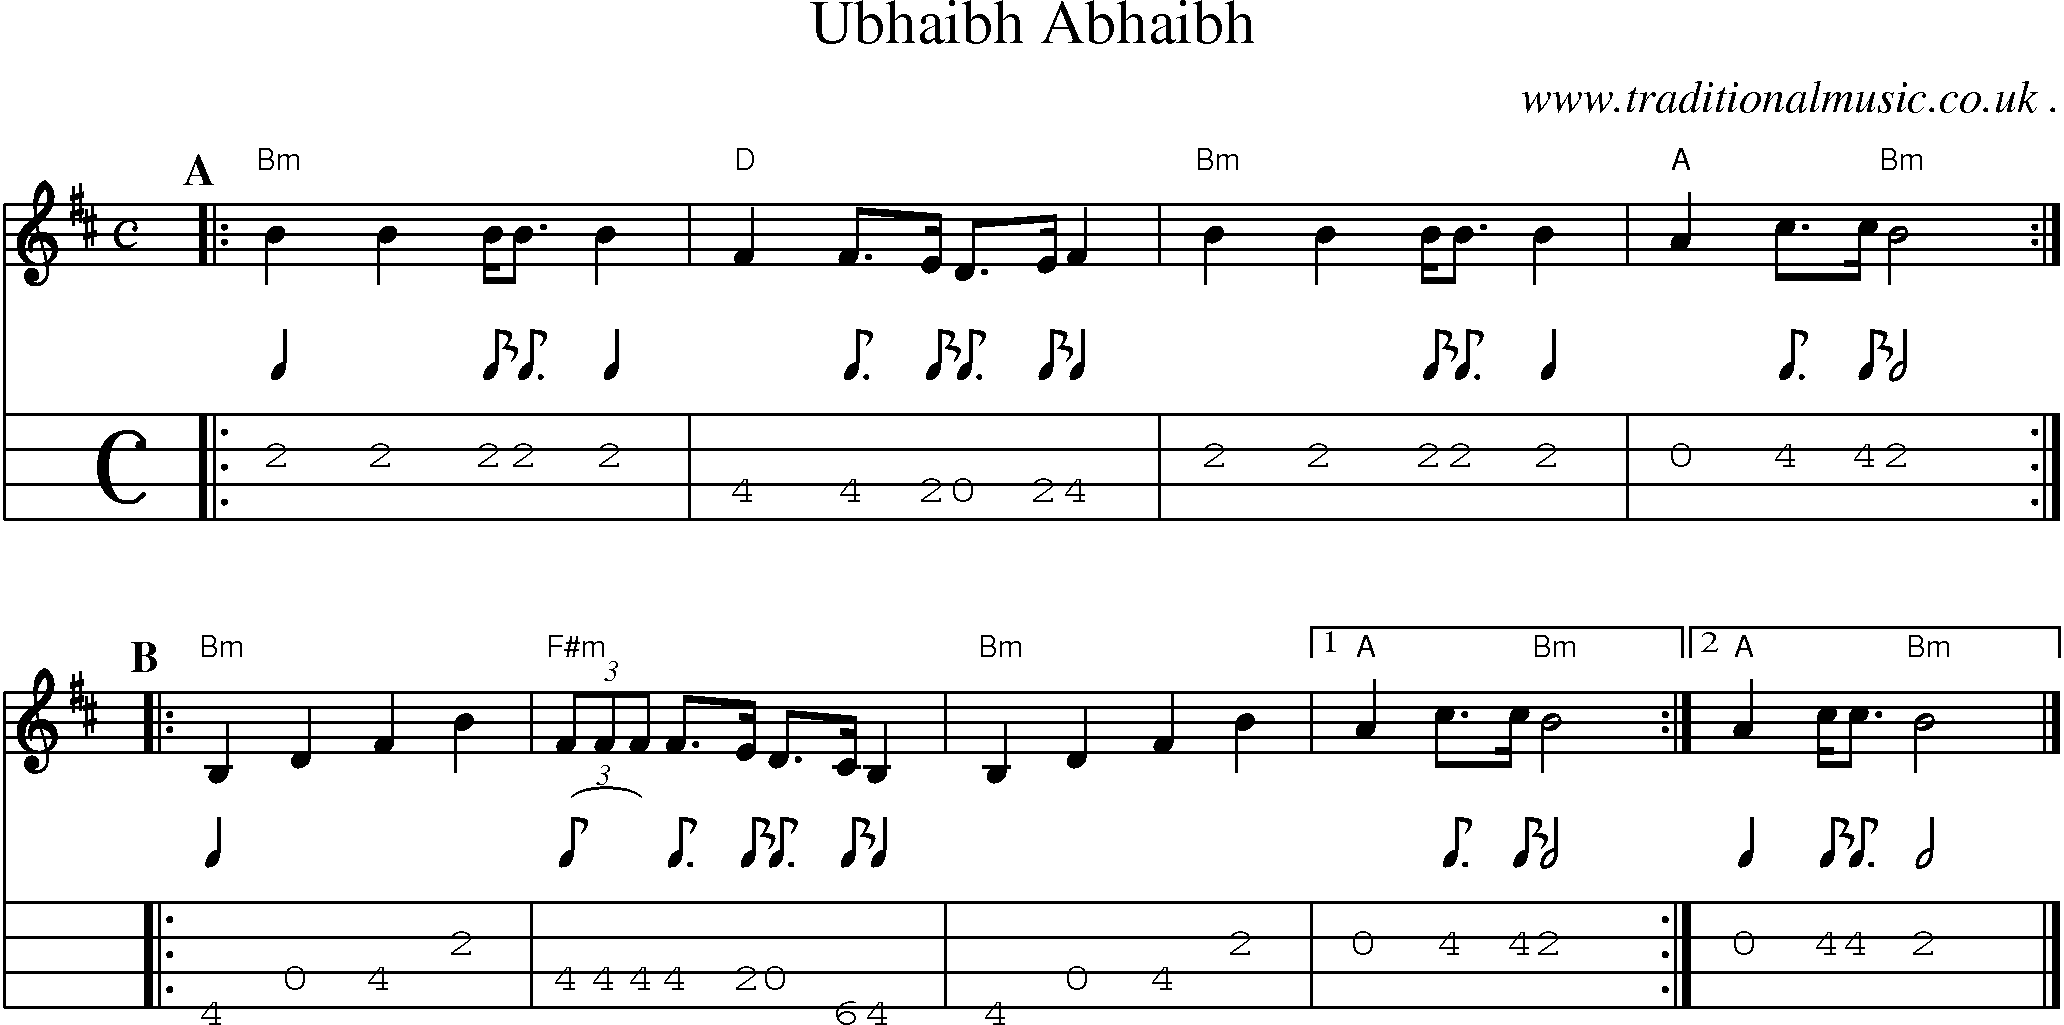 Sheet-music  score, Chords and Mandolin Tabs for Ubhaibh Abhaibh